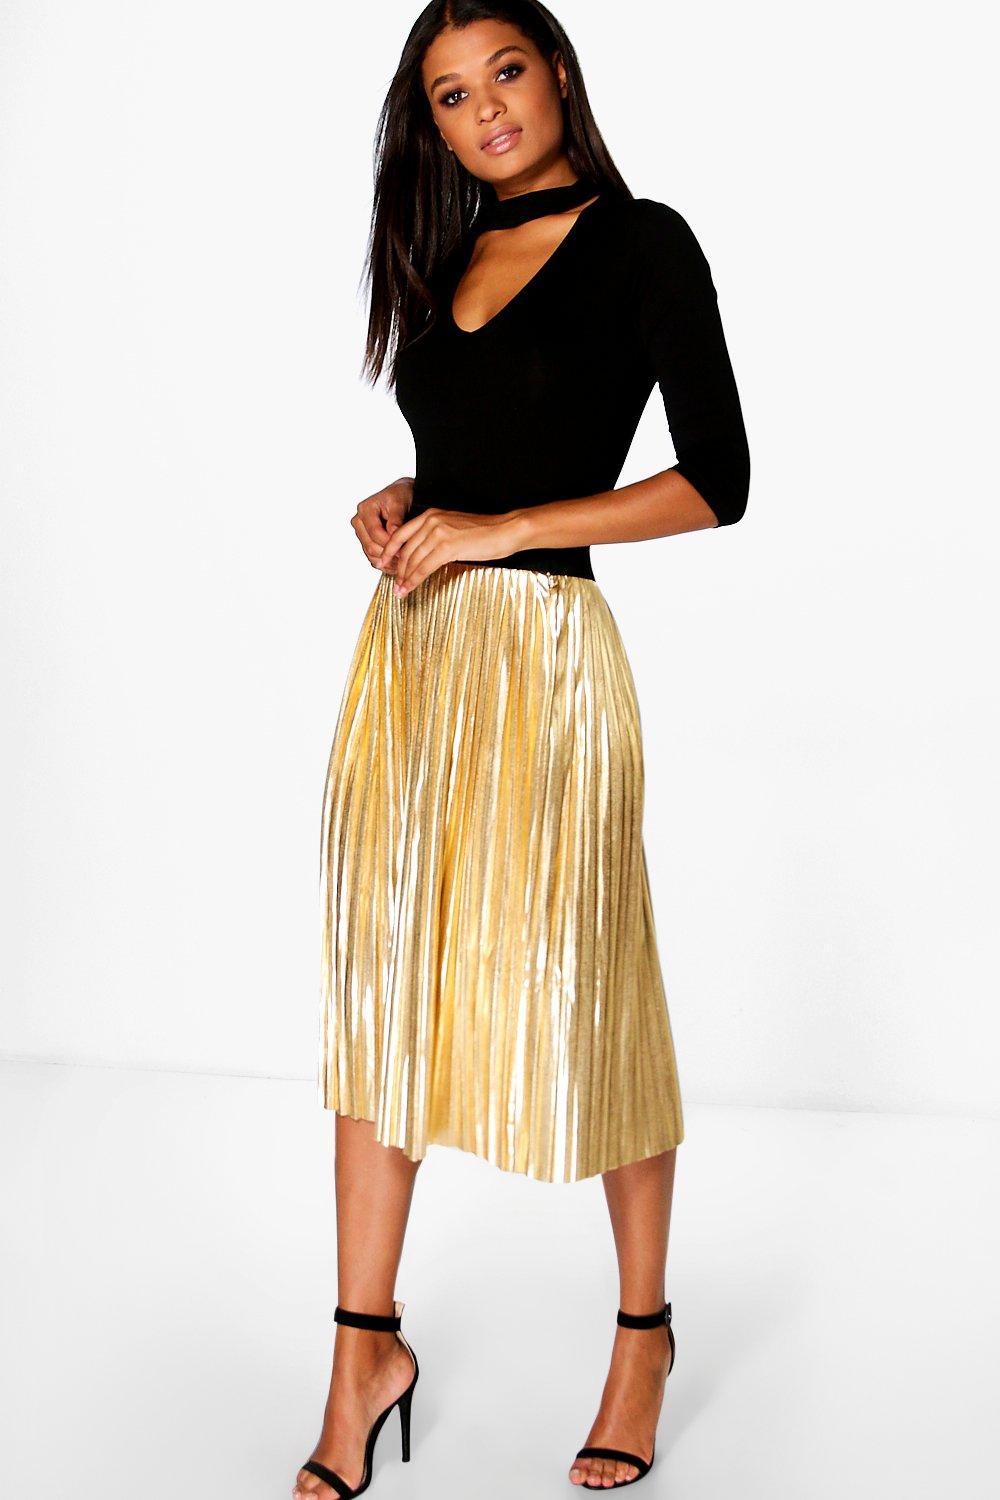 Boohoo Womens Jeana Metallic Pleated Midi Skirt | eBay